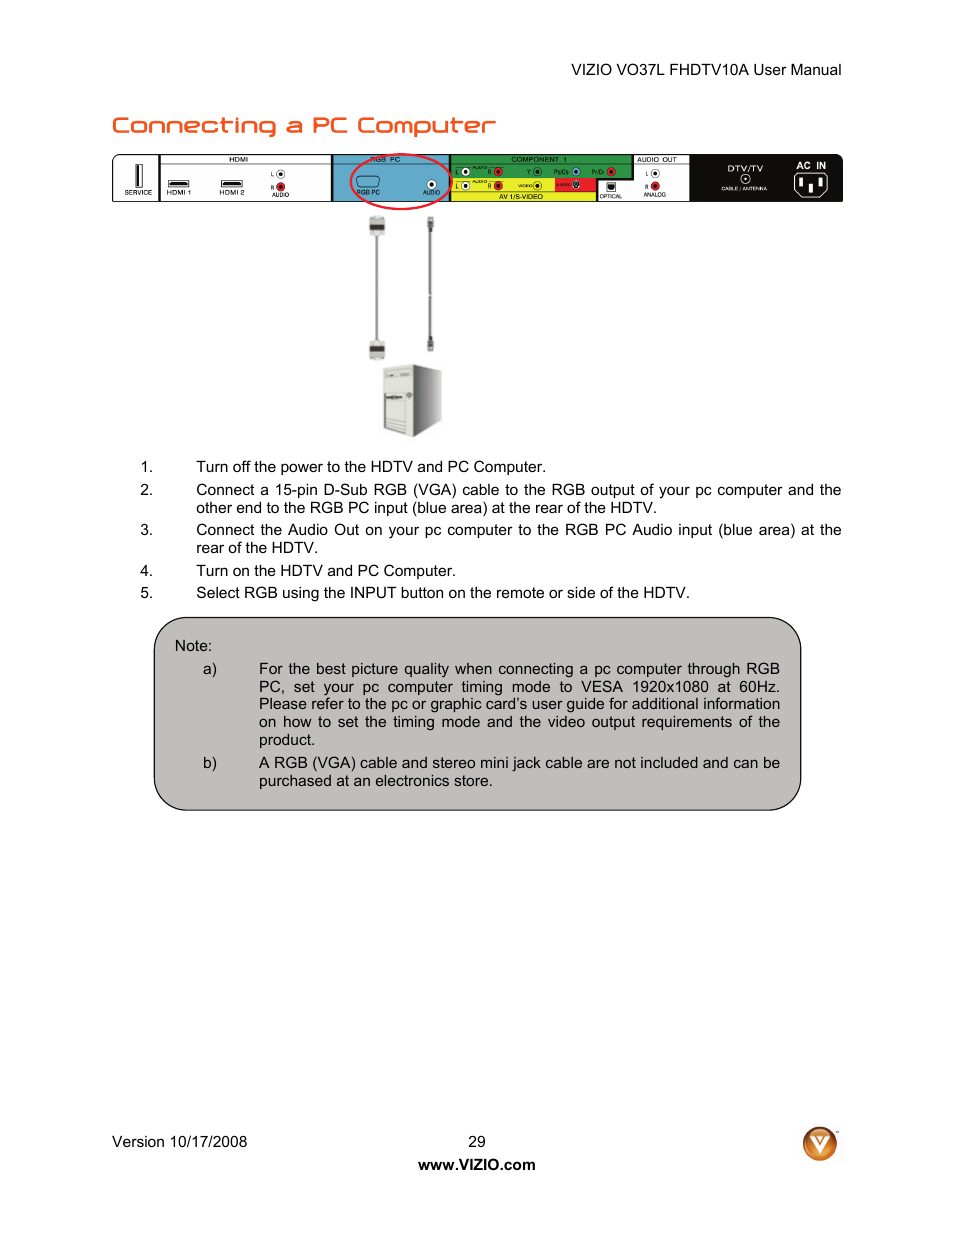 Connecting a pc computer | Vizio VO37L FHDTV10A User Manual | Page 29 / 80